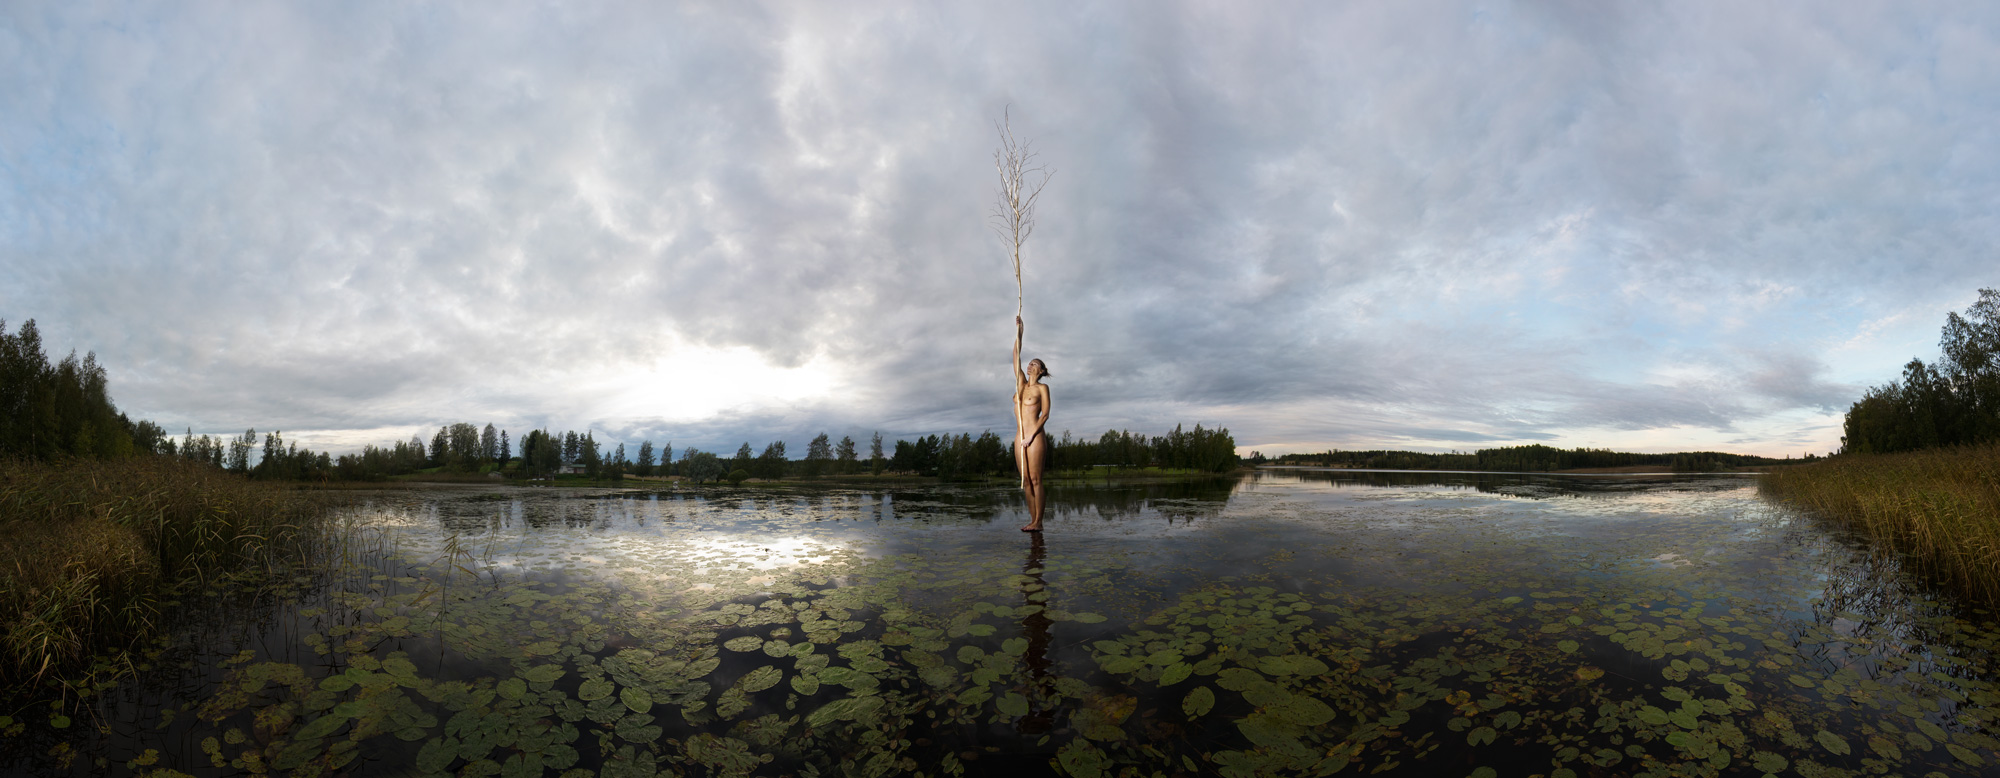 KÄÄNNA JUURI III. Fotografía y retoque digital. Lago Mustajarvi, Hämeenkyrö, Finlandia